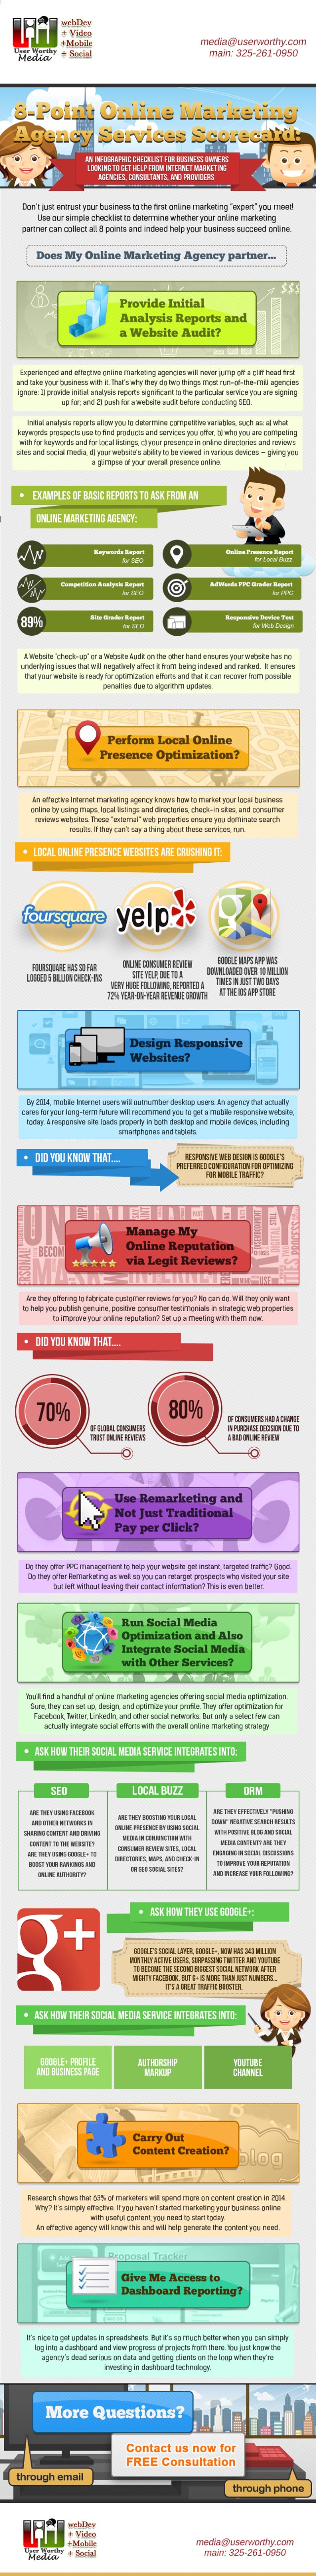 Online Marketing Agency Services Scorecard Infographic